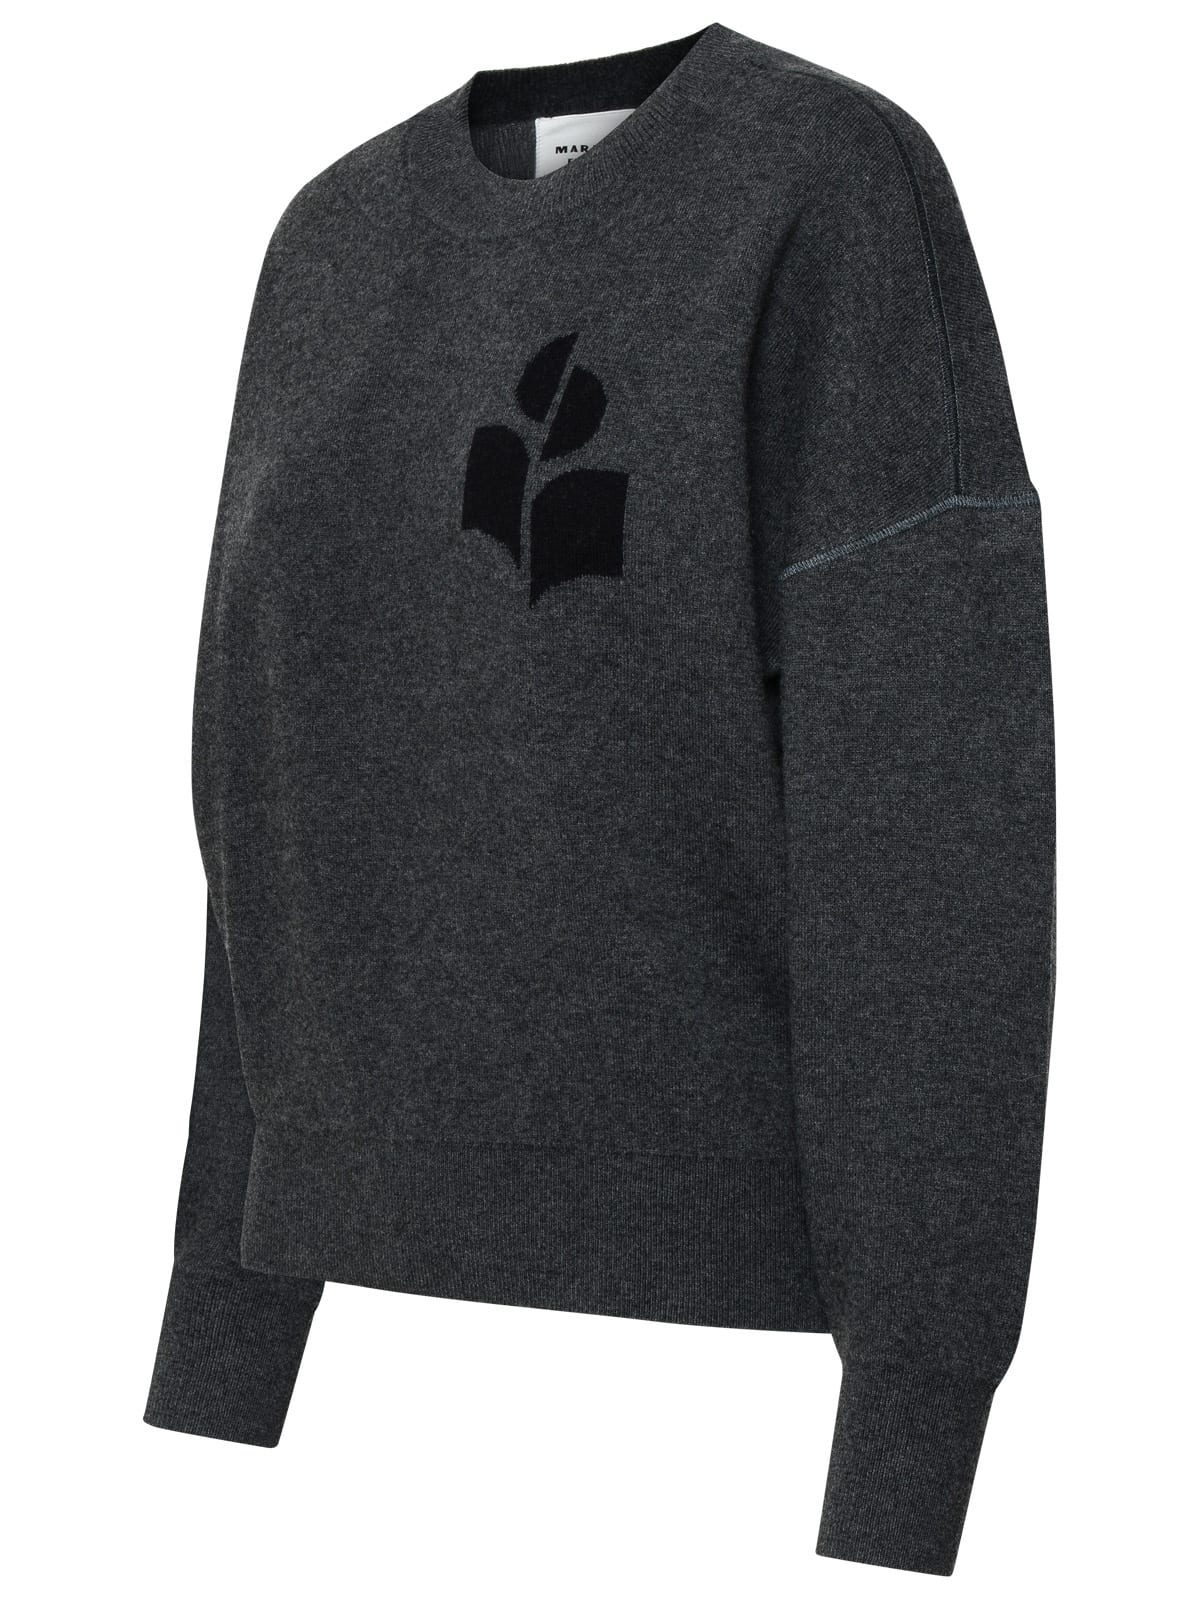 Shop Marant Etoile Grey Wool Blend Atlee Sweater